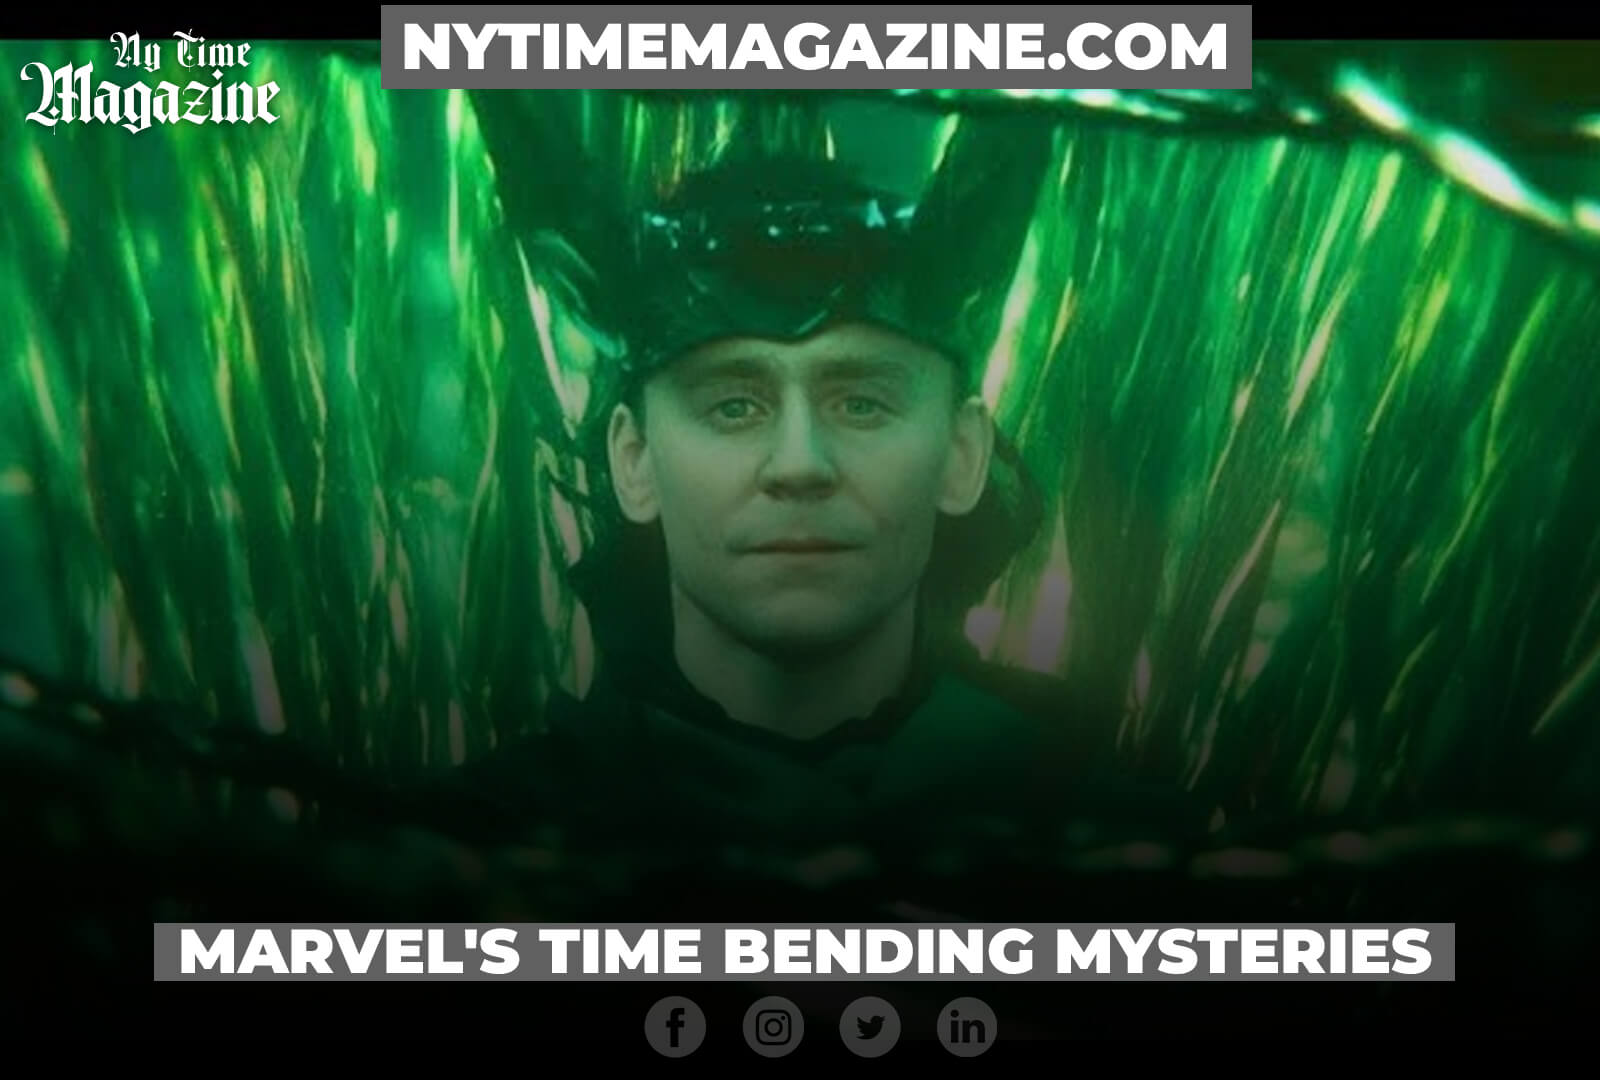 Marvel's Time Bending Mysteries: Loki's Green Time Stone and Jonathan Majors' MCU Villainy